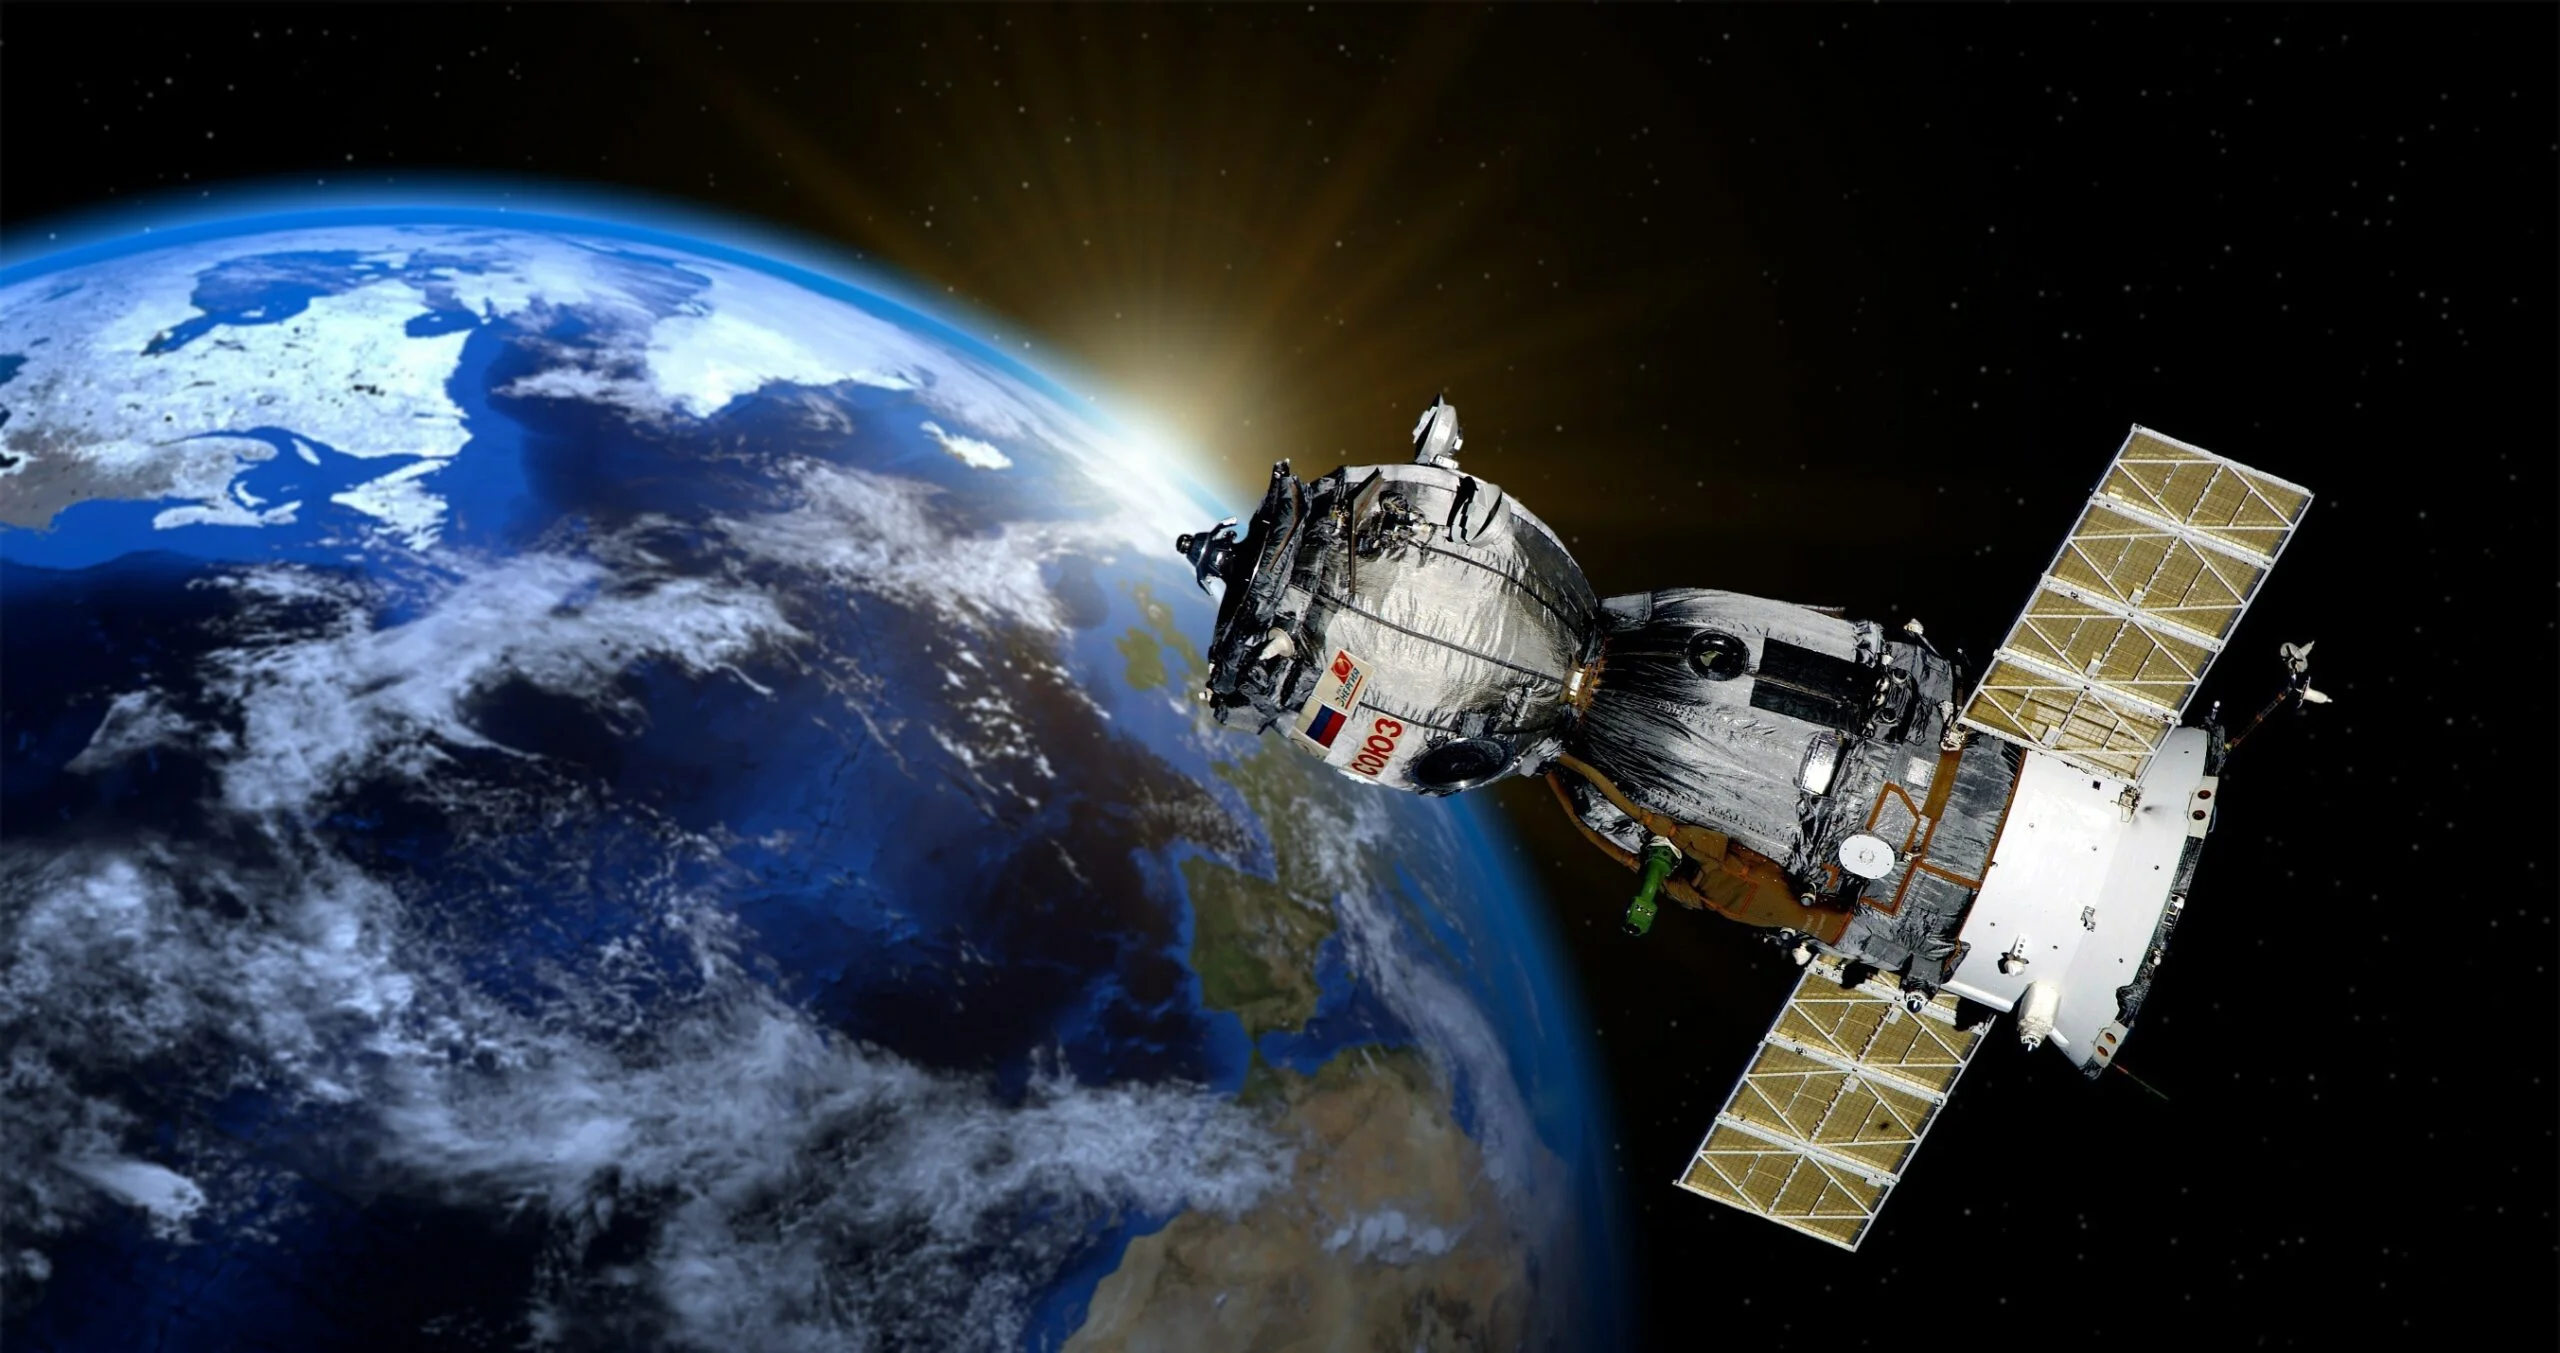 Satellite Space Station Aviation - Photo by Alexa at pixabay